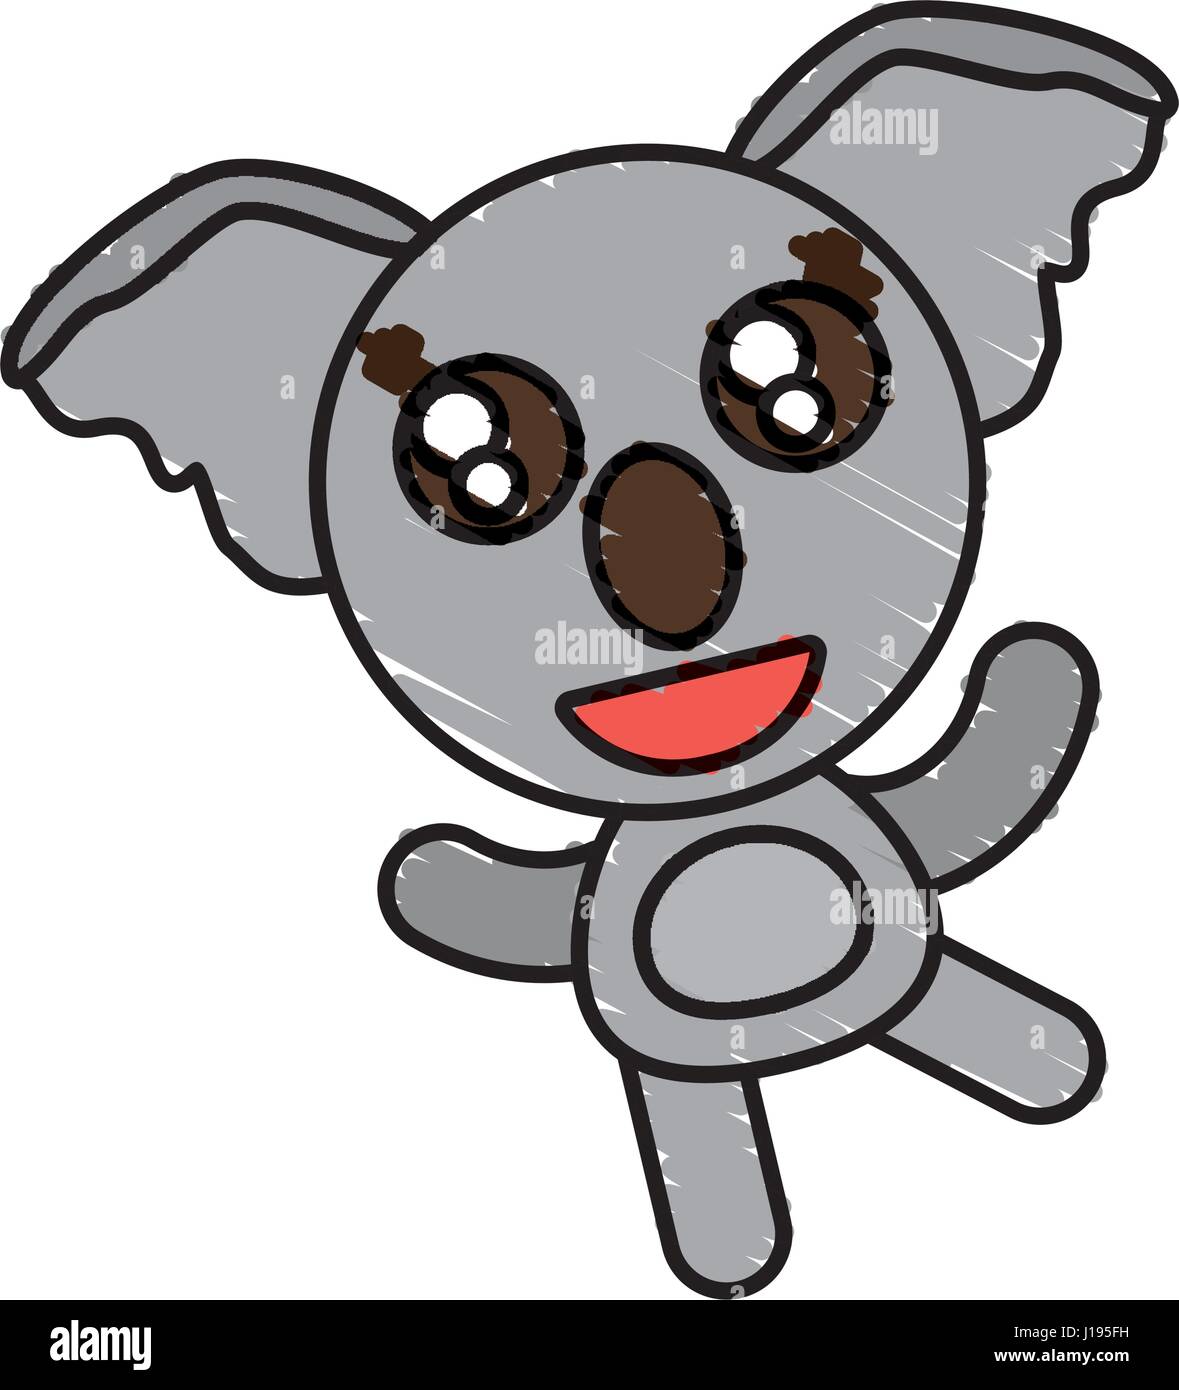 Koala Clipart-koala bear is standing upright and smiling